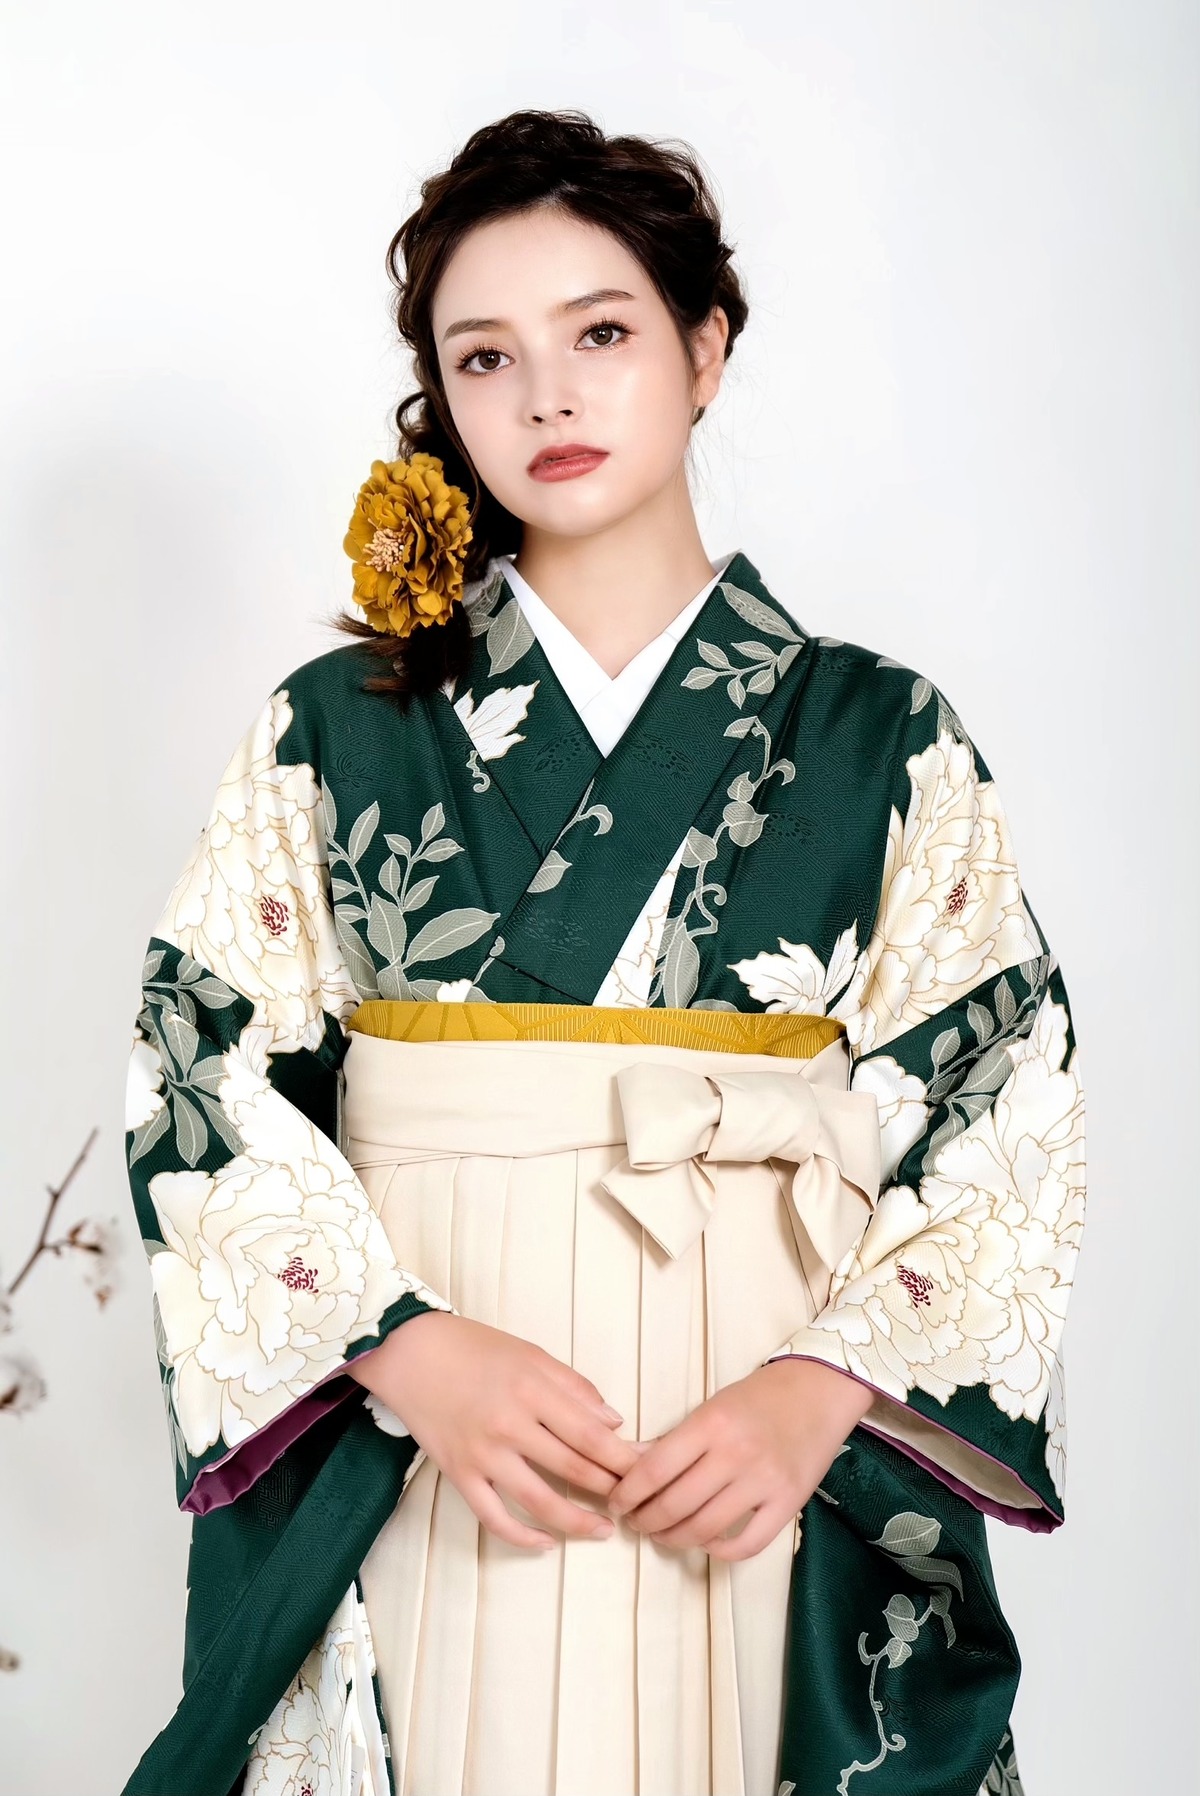 Kimono Sienne 卒業式袴3点セット 深緑にアイボリーの牡丹 二尺袖着物 袴 卒業式 | Kimono Sienne